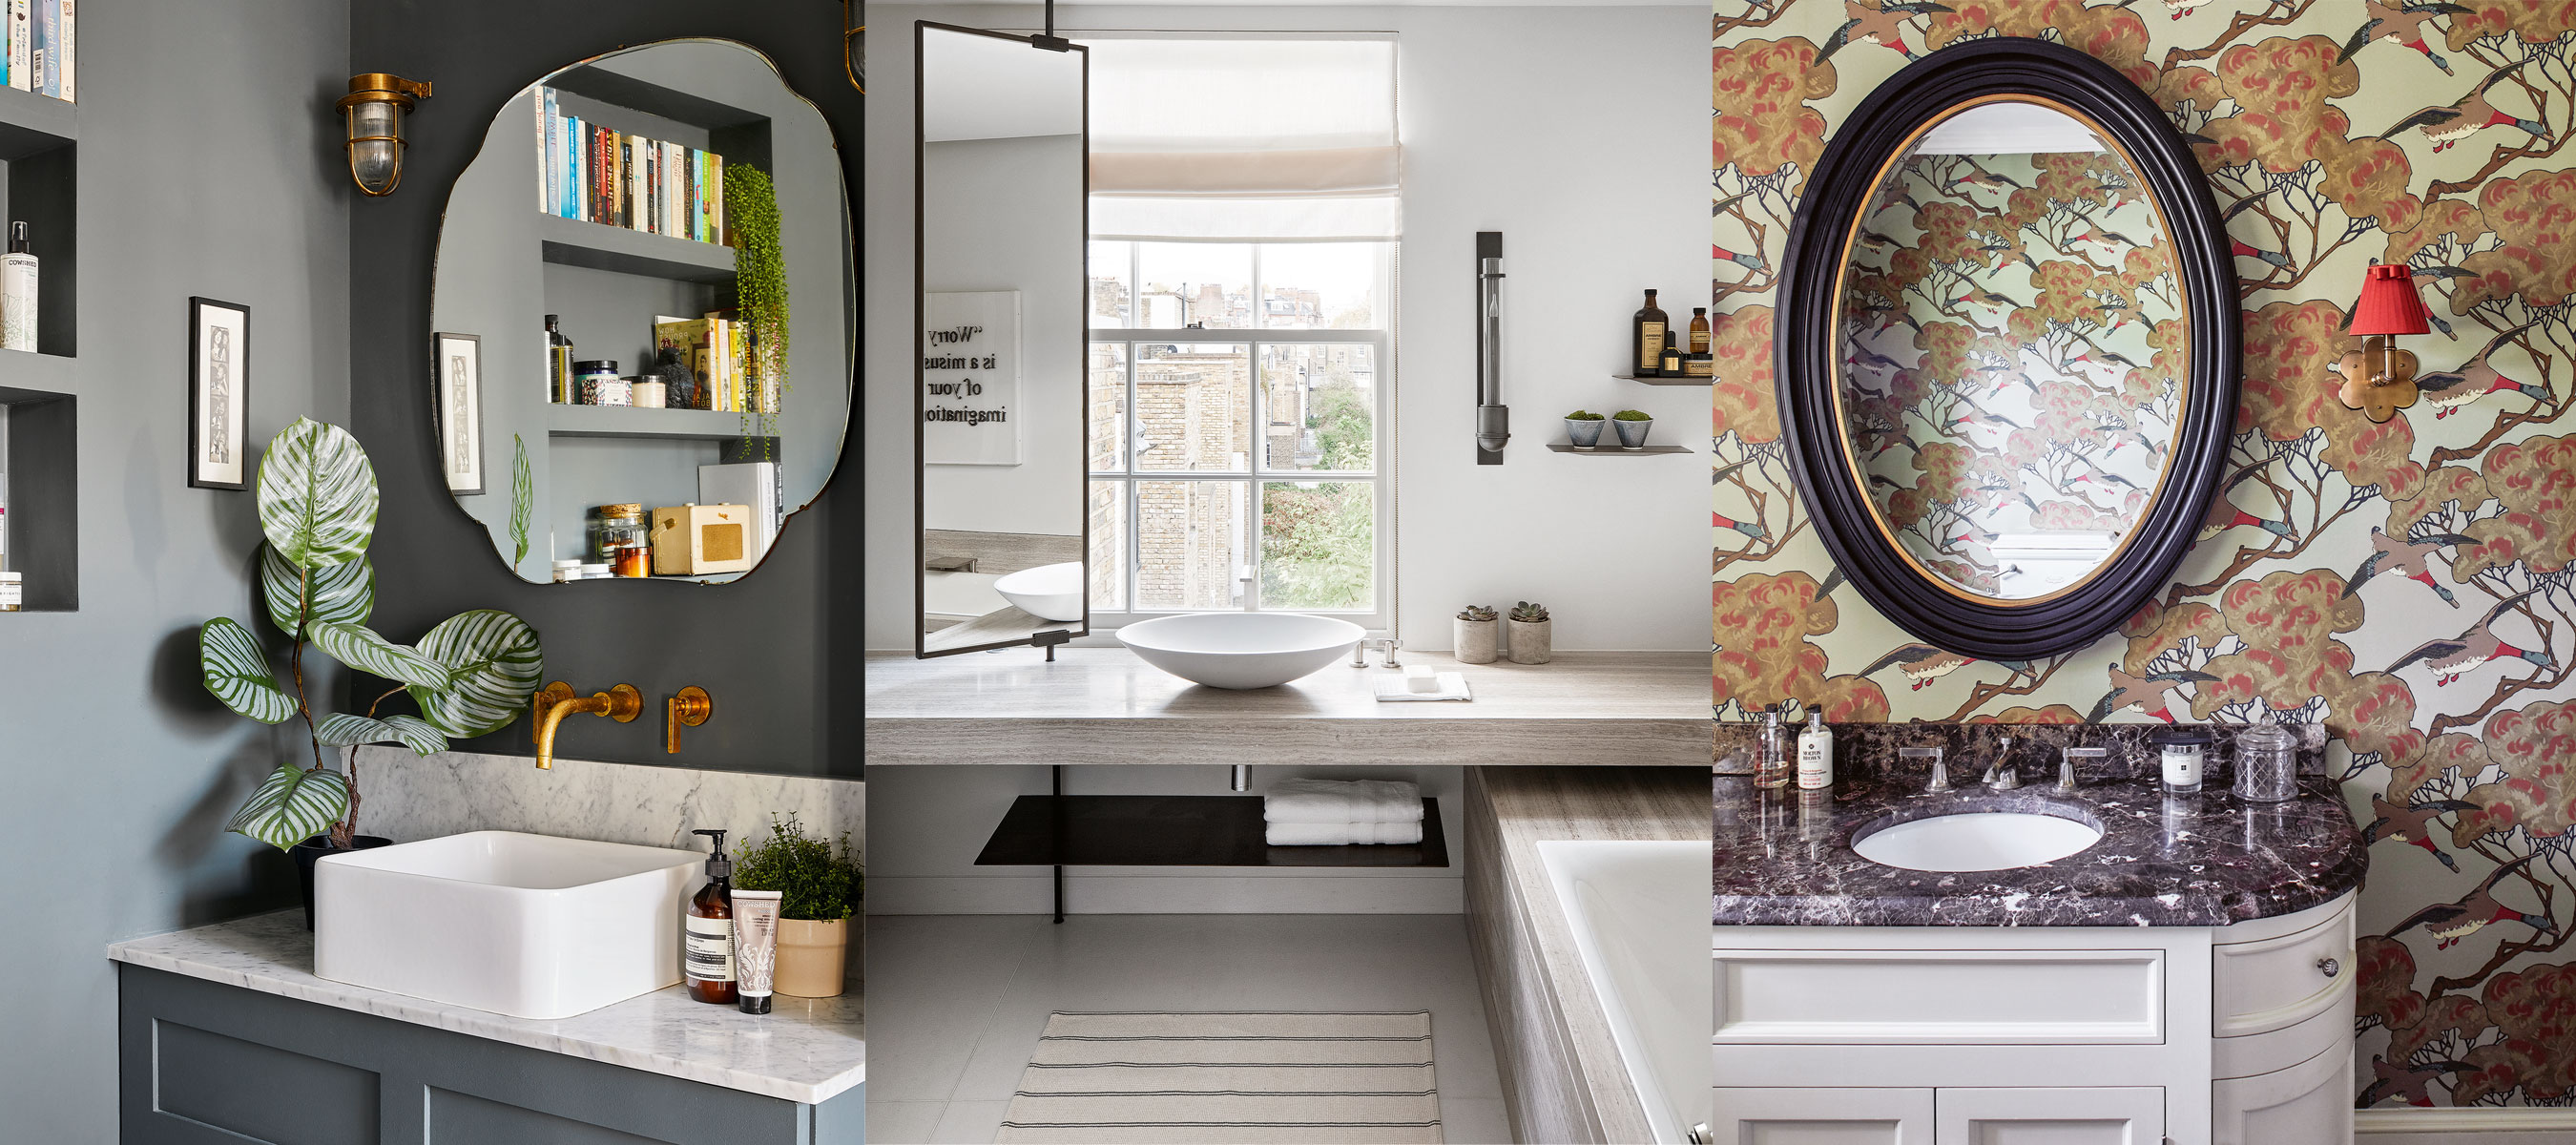 10 Stunning Bathroom Mirror Ideas